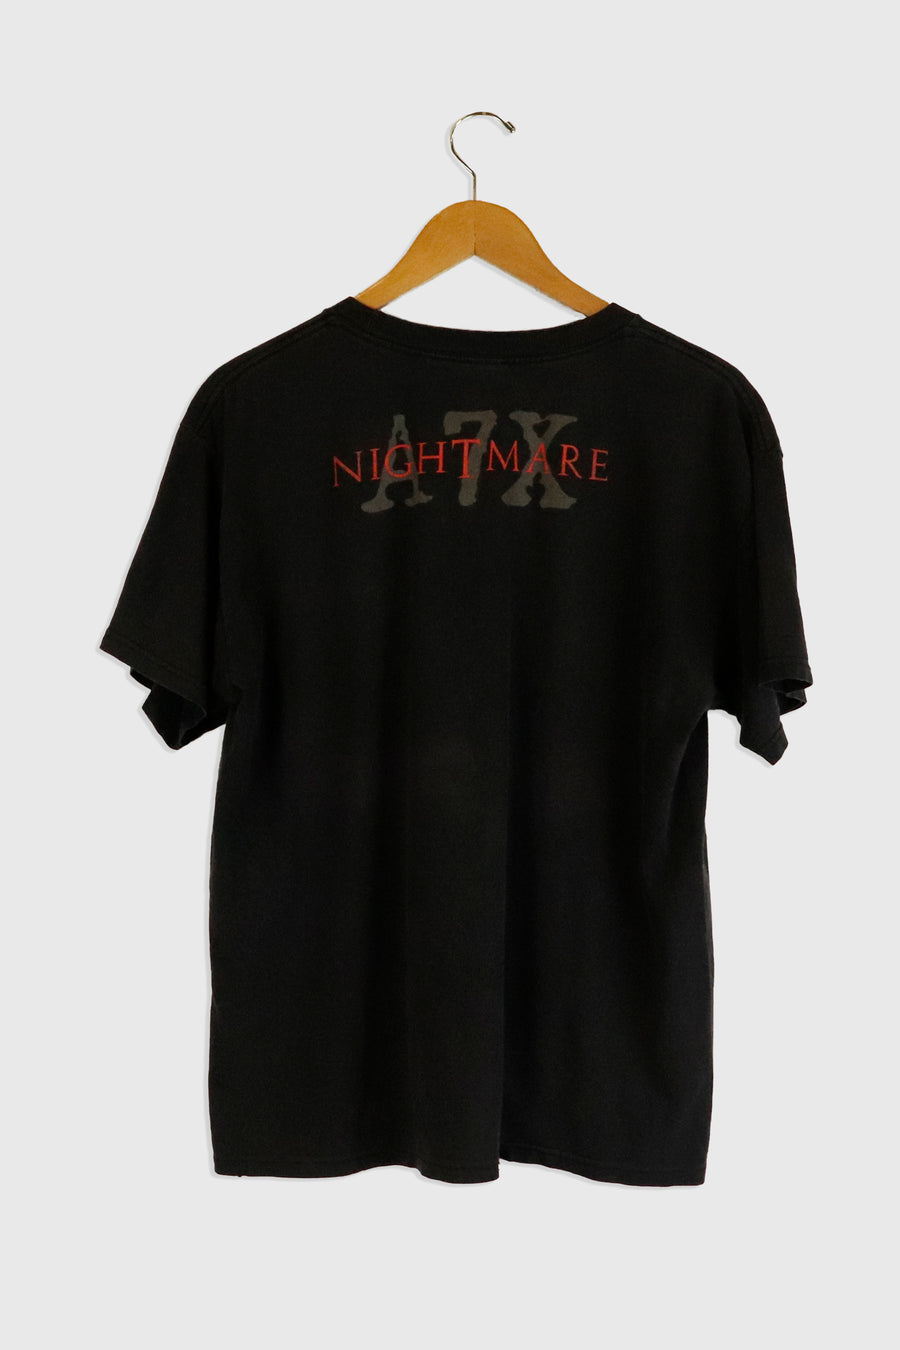 Vintage Avenged Sevenfold Nightmare T Shirt